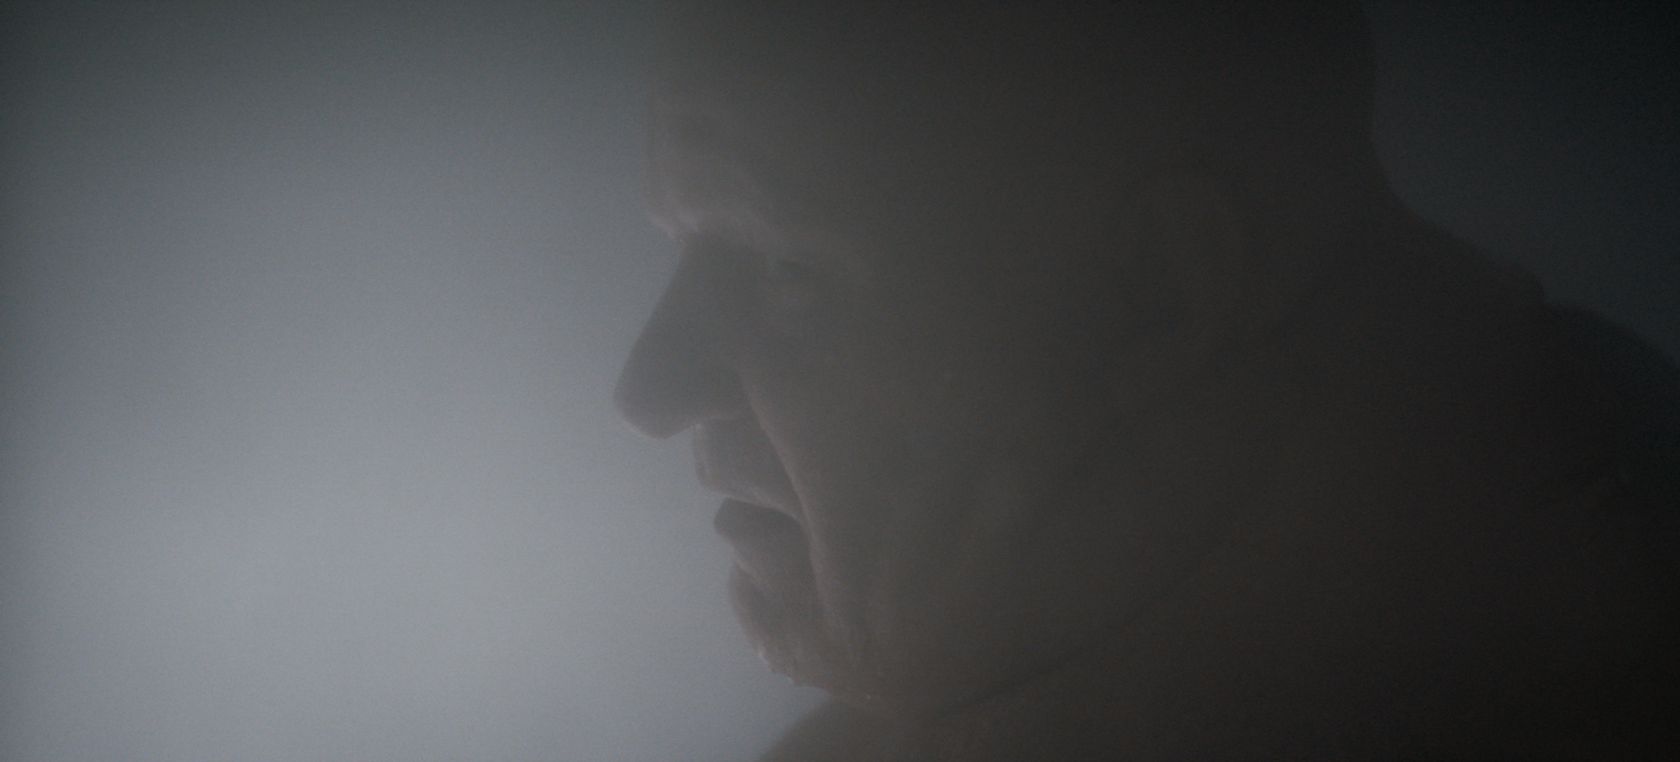 7 razones para ver ‘Dune’, el festín audiovisual de Denis Villeneuve y Timothee Chalamet